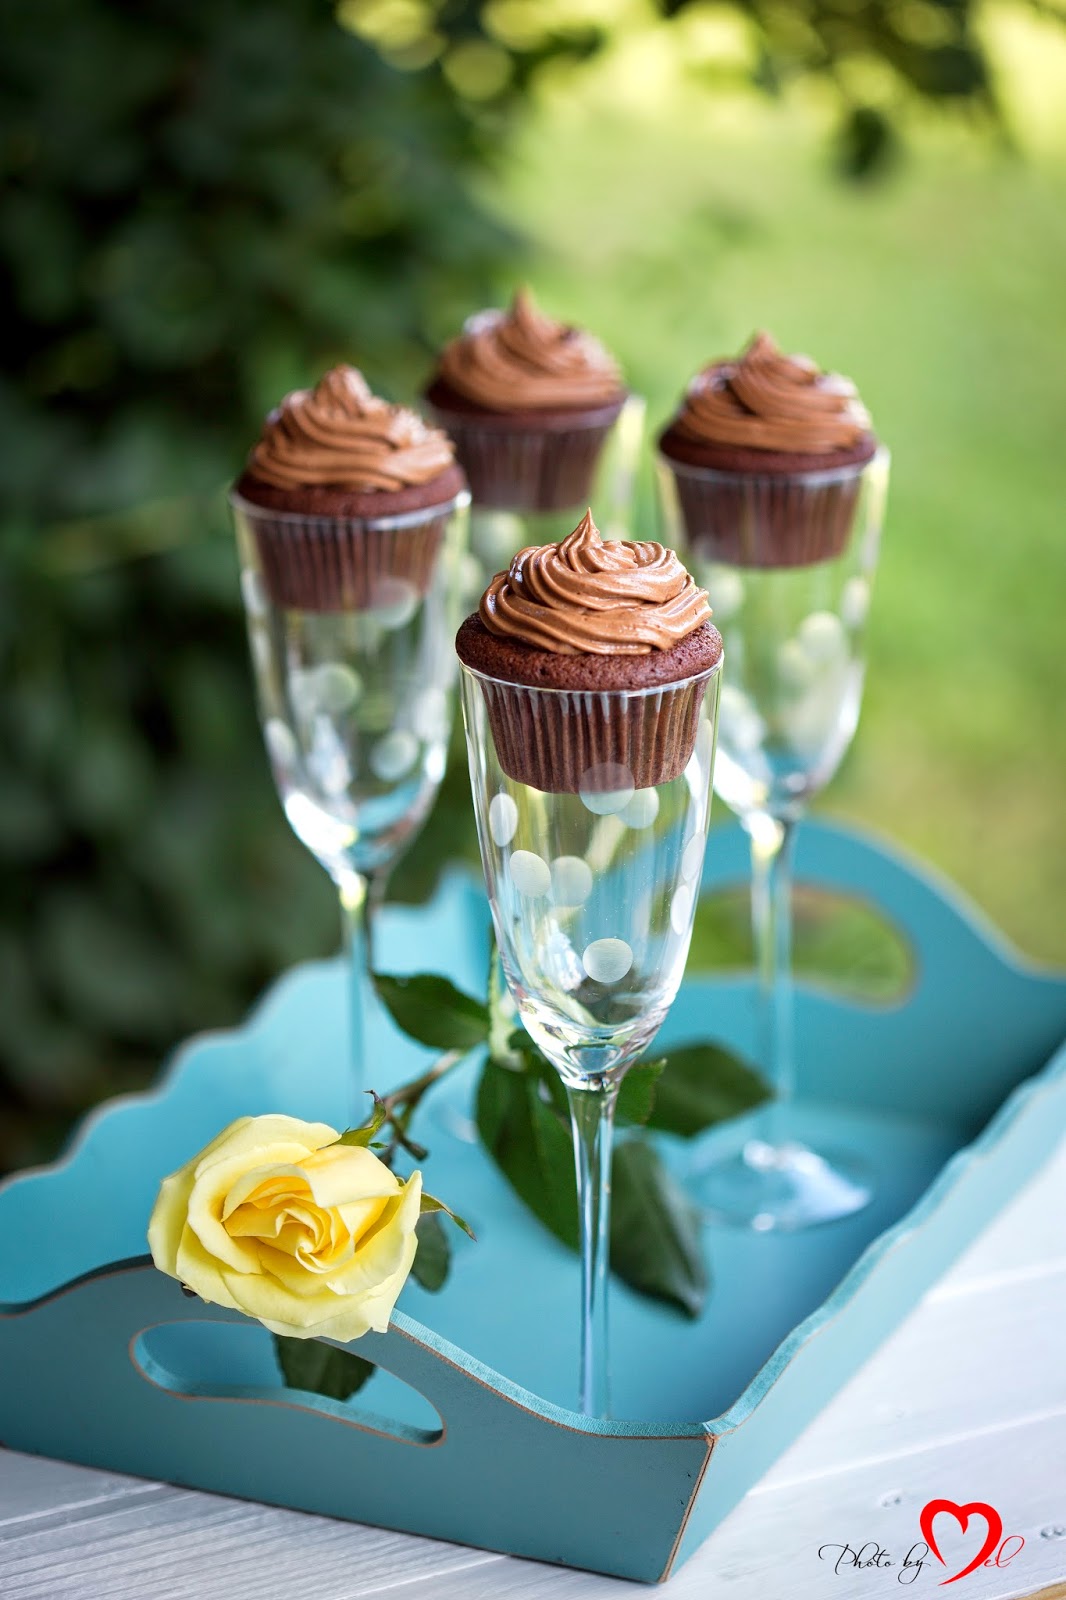 Cafe Chocolada: Chocolate Cupcakes with Chocolate Cream